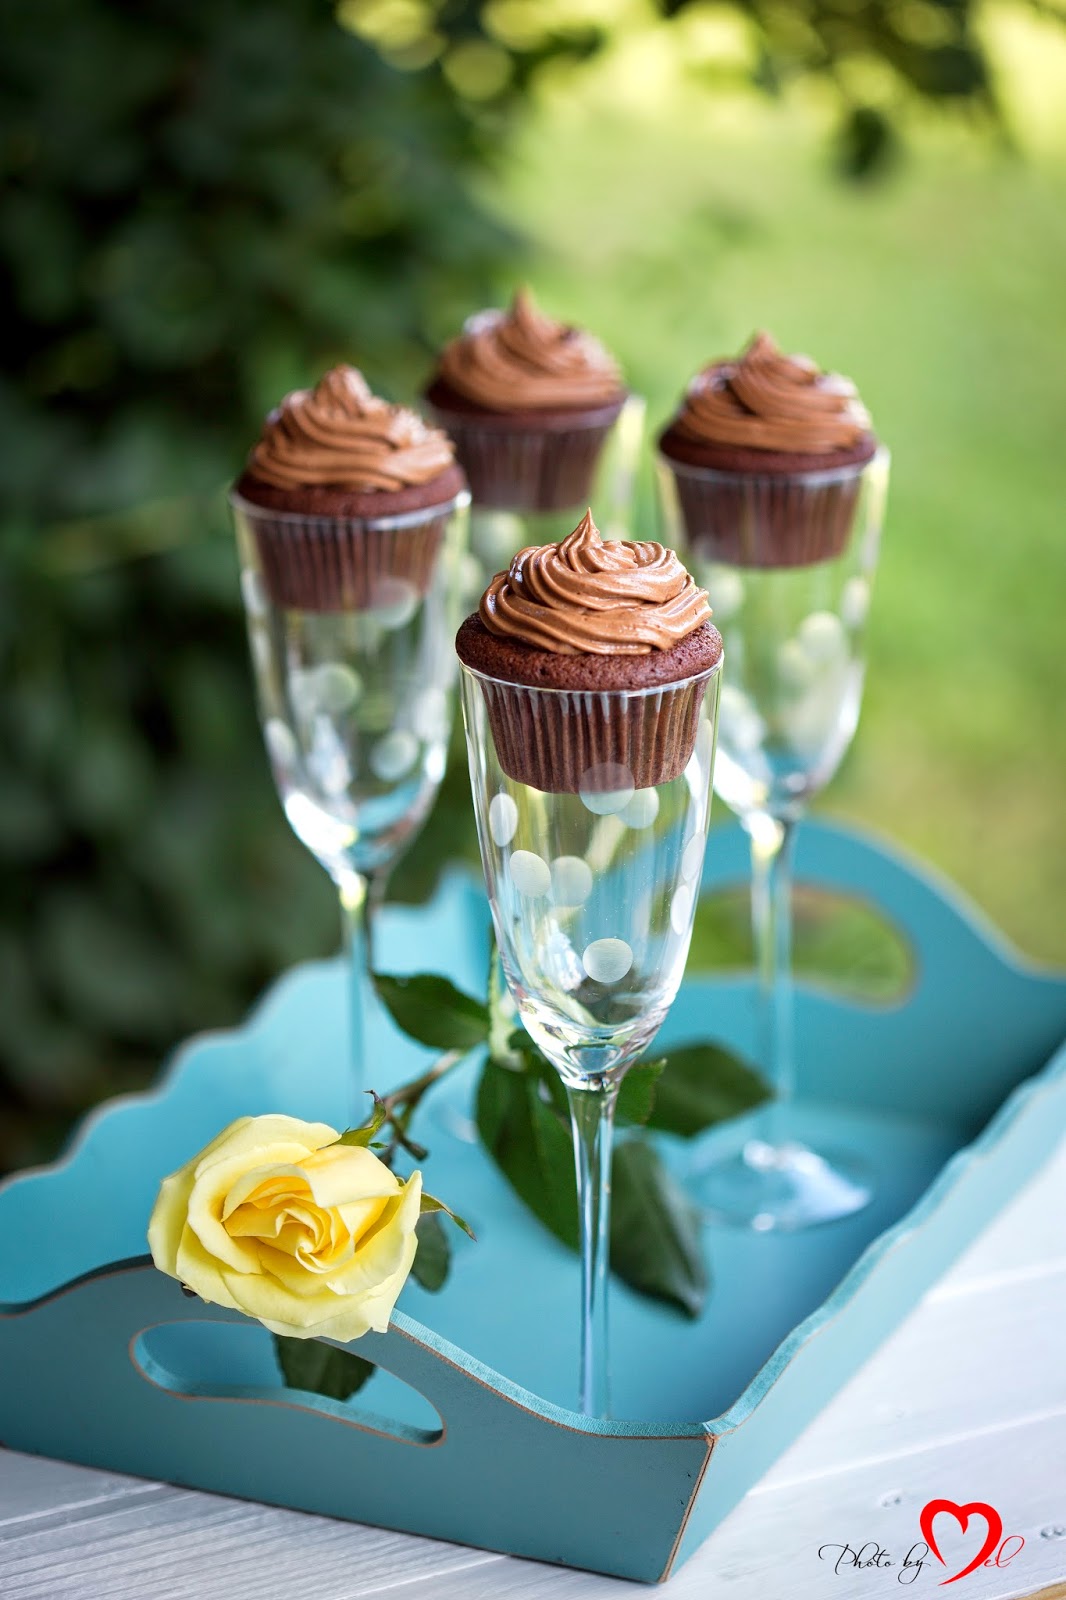 Cafe Chocolada: Chocolate Cupcakes with Chocolate Cream